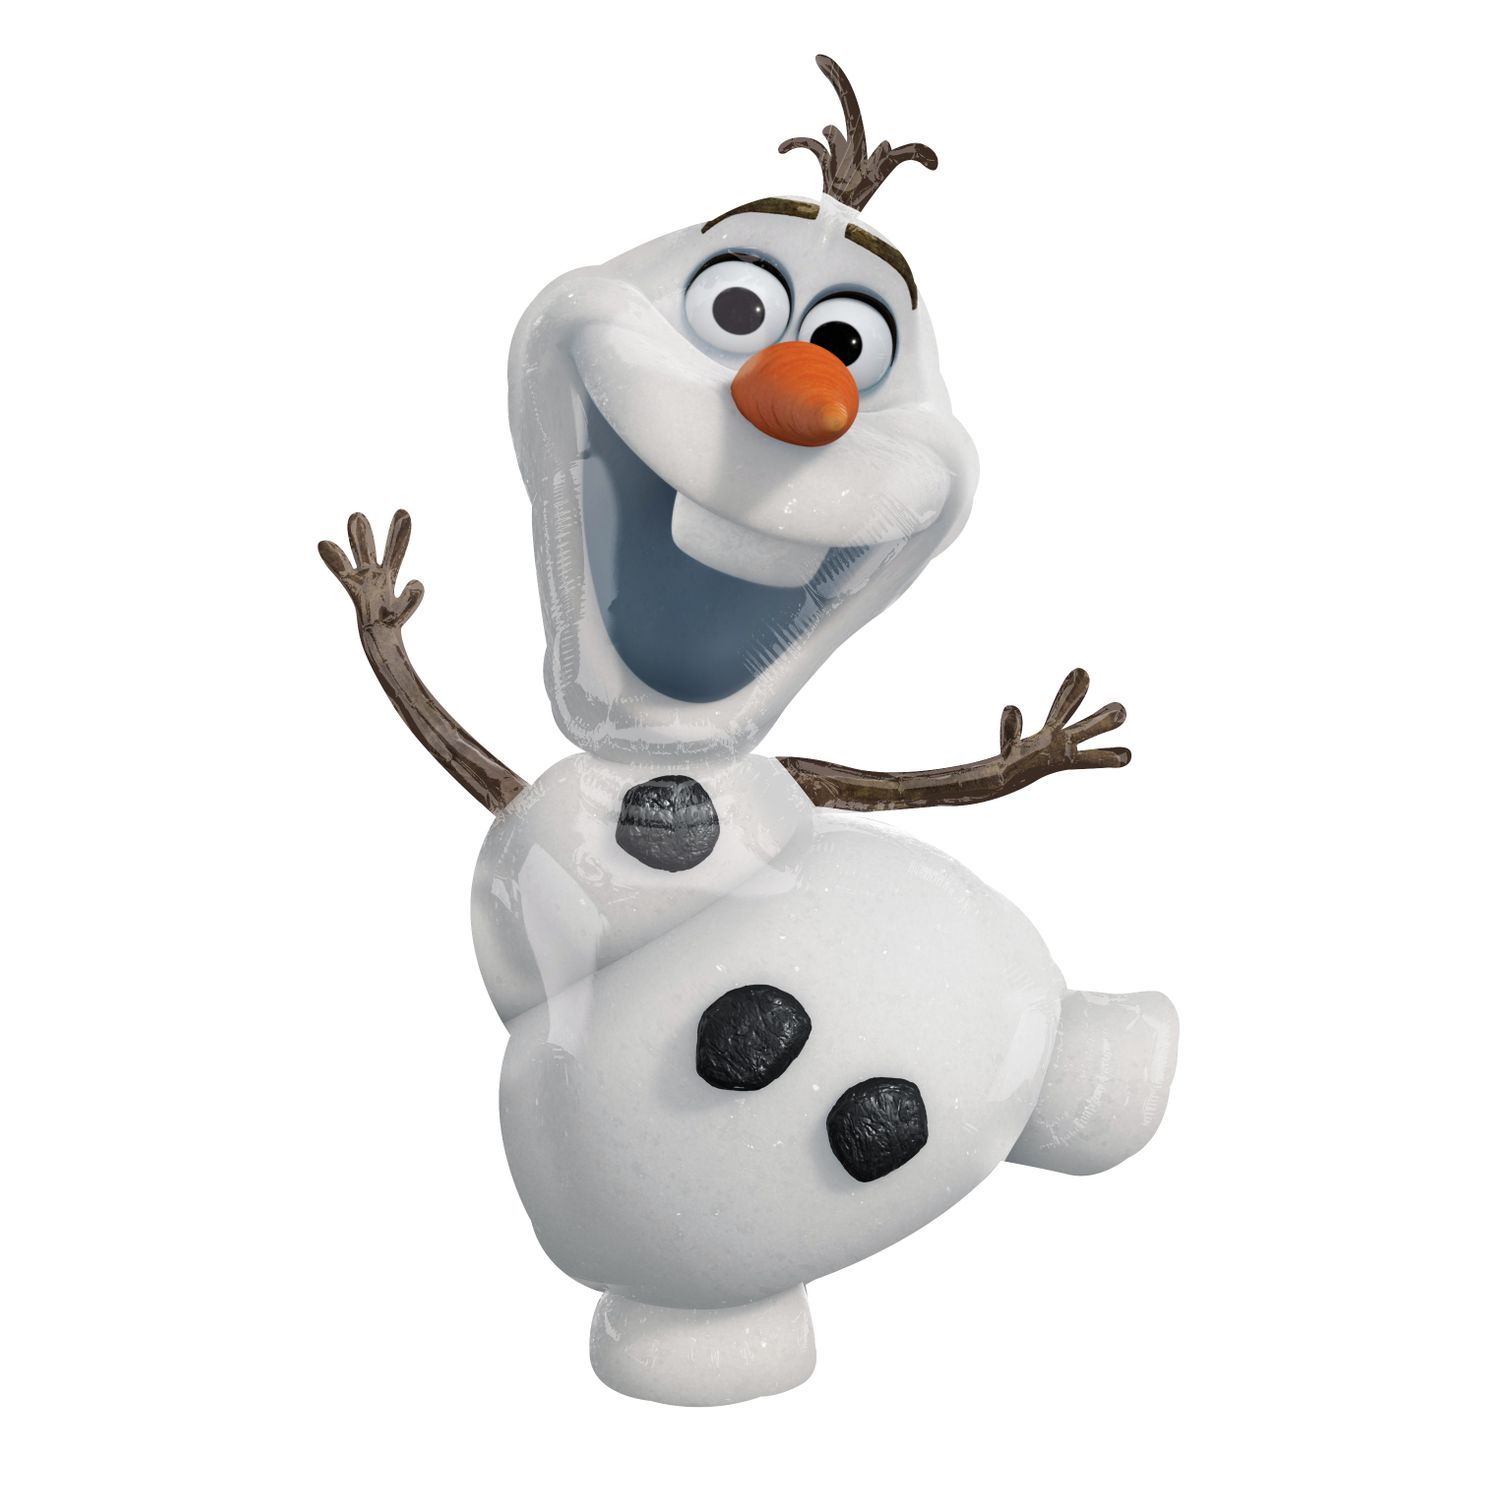 https://cdn02.plentymarkets.com/8g1j1xorqt9q/item/images/411416/full/411416-Disney-Frozen-Die-Eiskoenigin-Olaf-Folienballon-86-cm.jpg